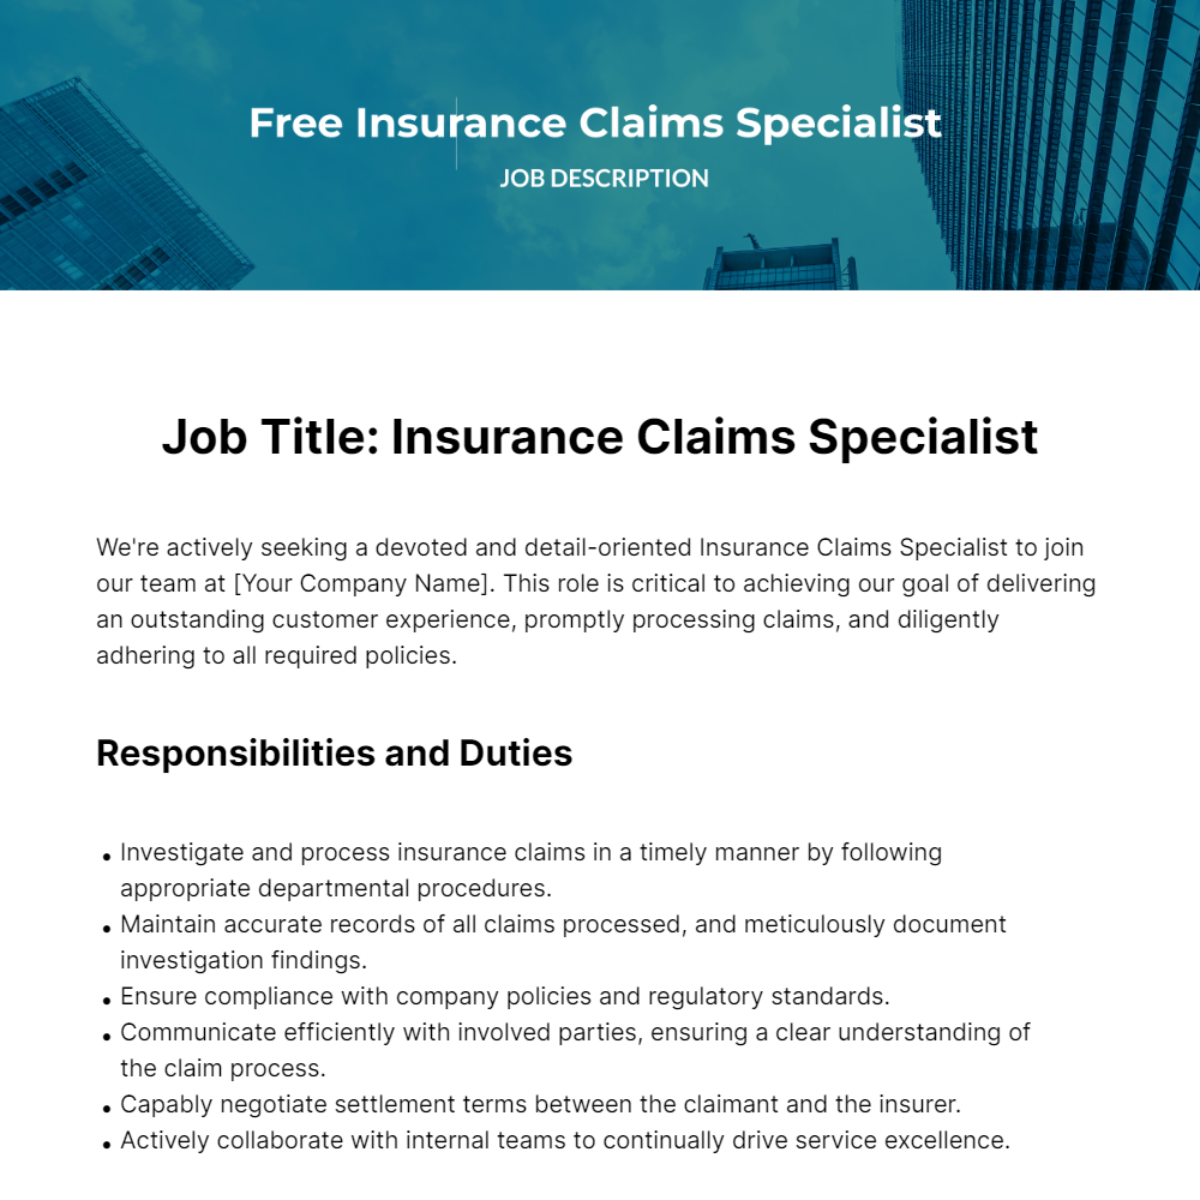 Free Insurance Claims Specialist Job Description Template